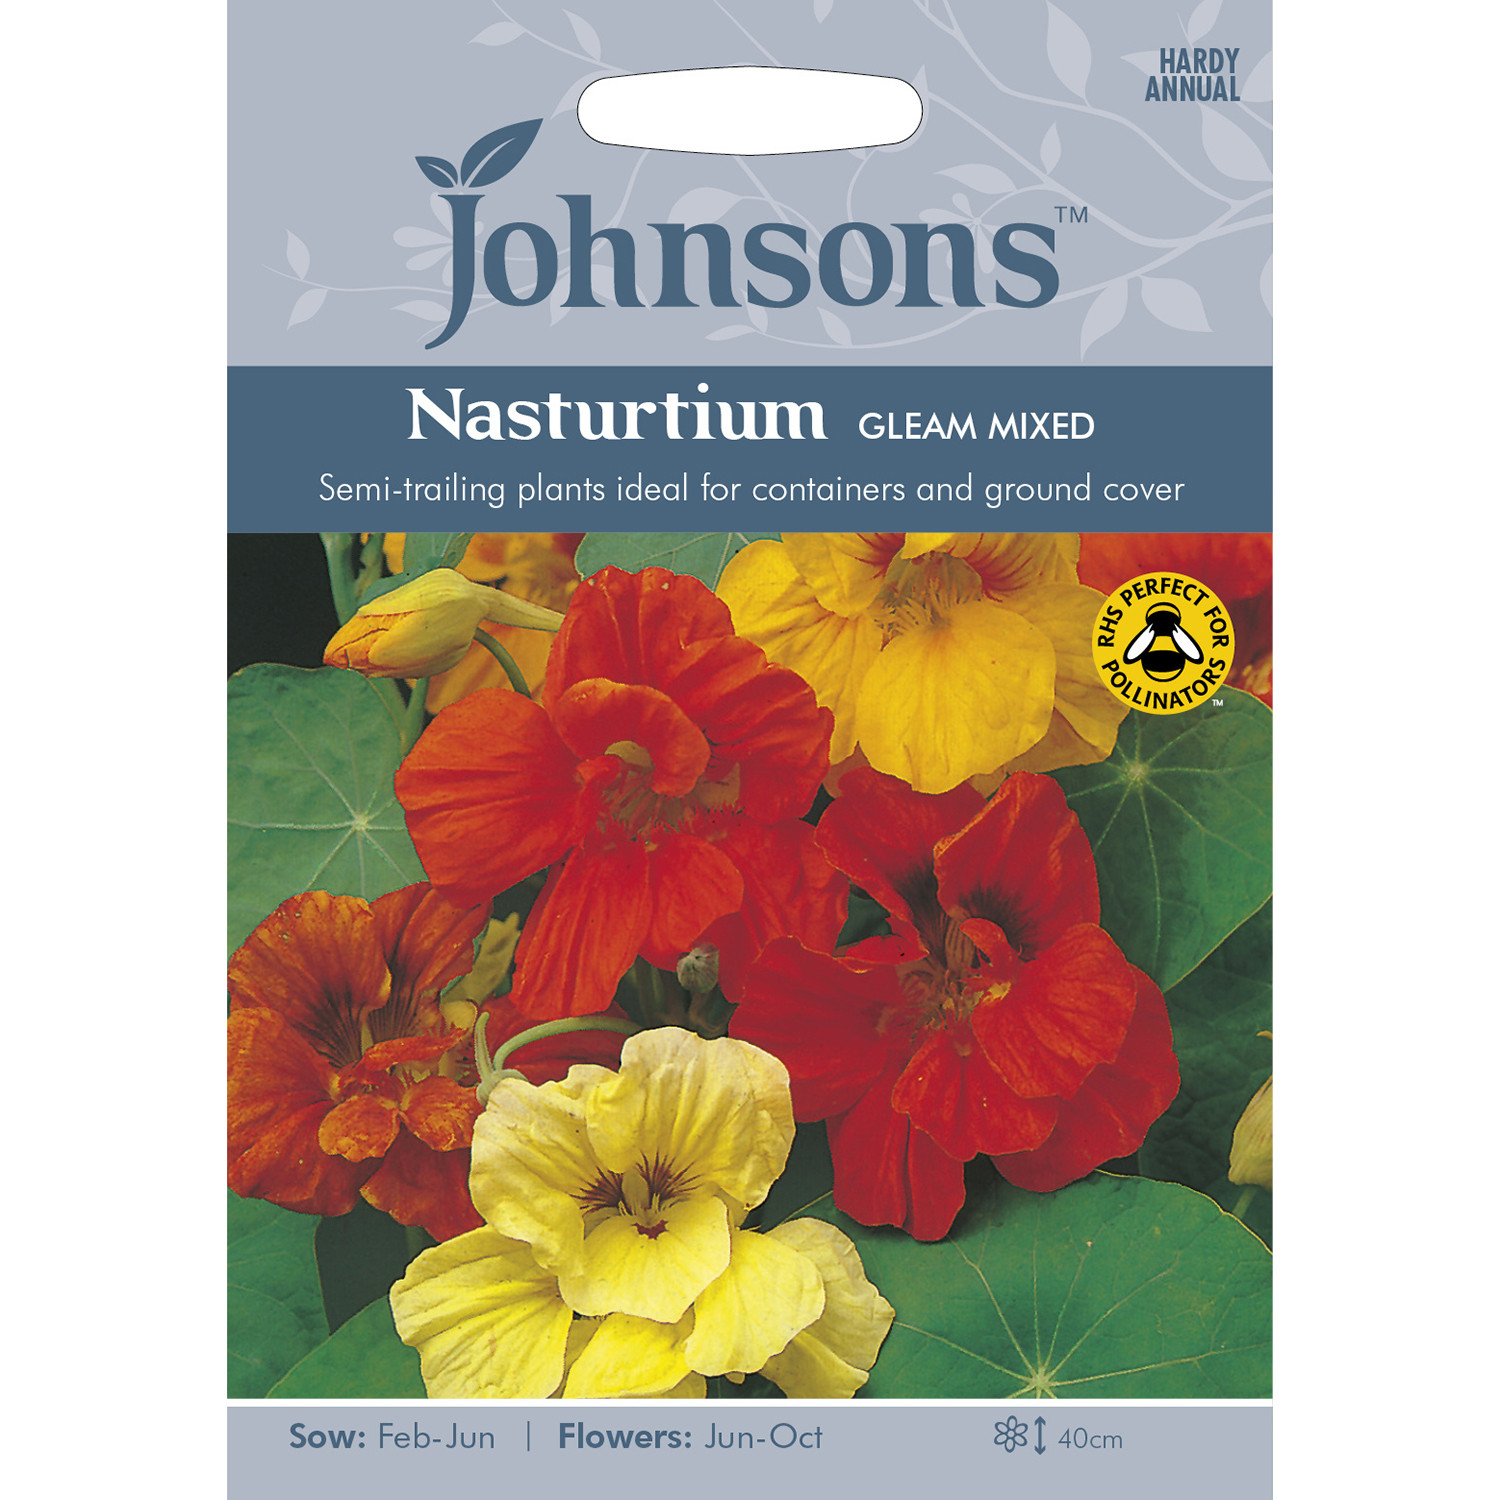 Johnsons Nasturtium Gleam Mixed Flower Seeds Image 2